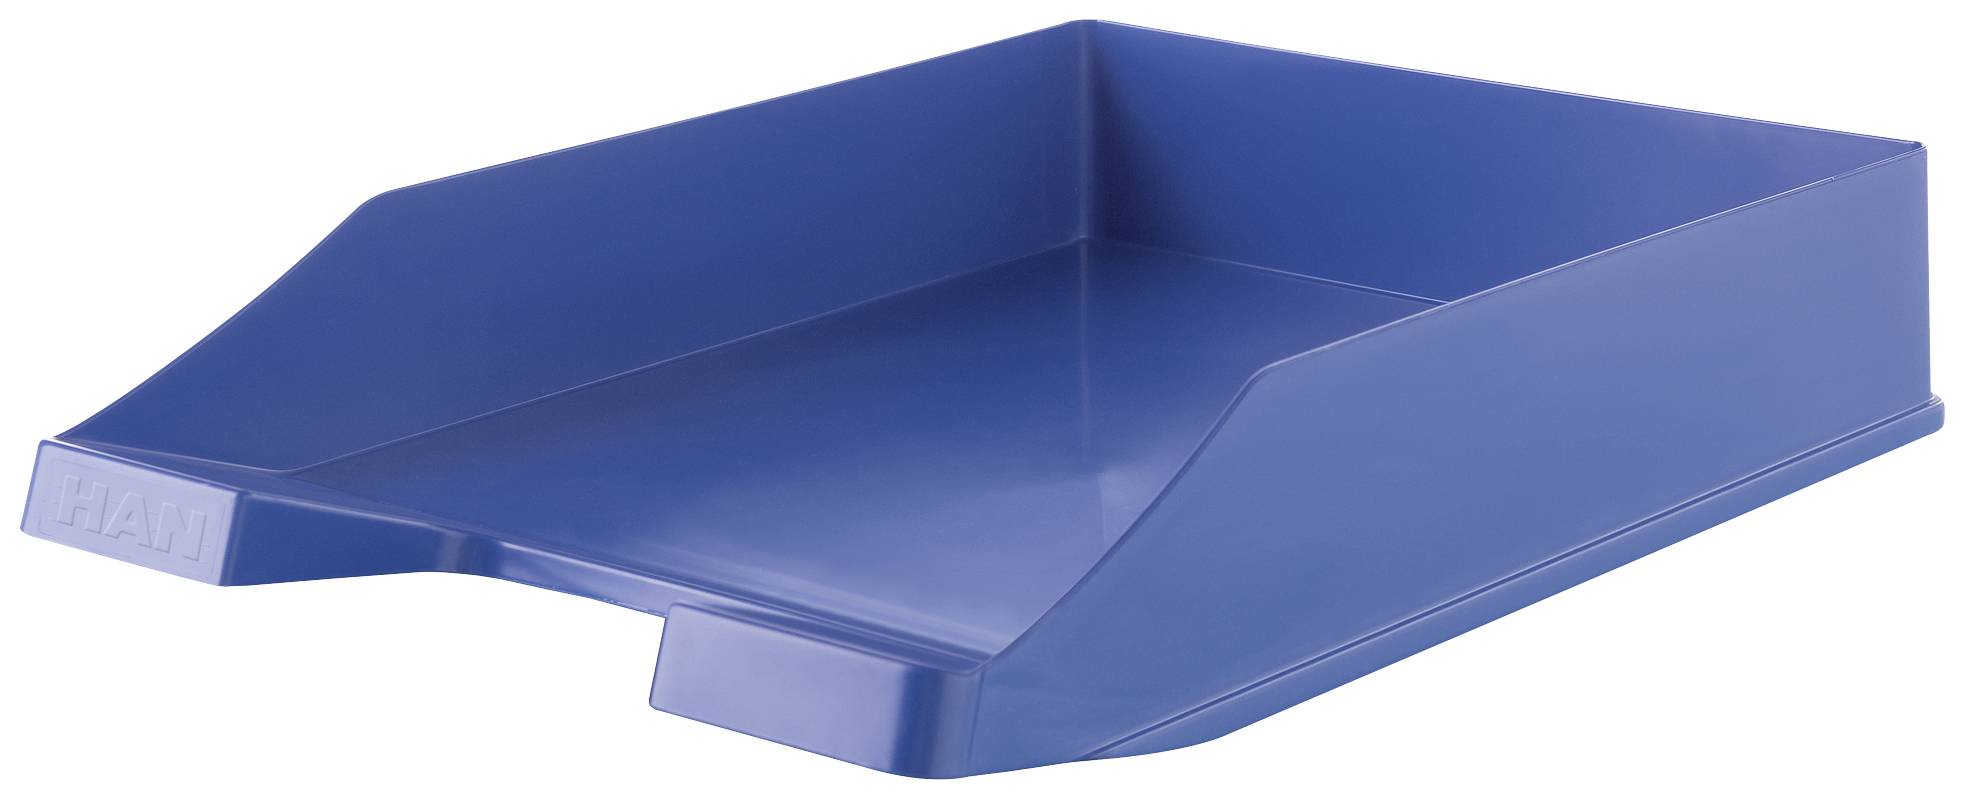 HAN Briefablage KARMA, DIN A4, blau 100 % Recyclingmaterial, mehrfach übereinander stapelbar für - 1